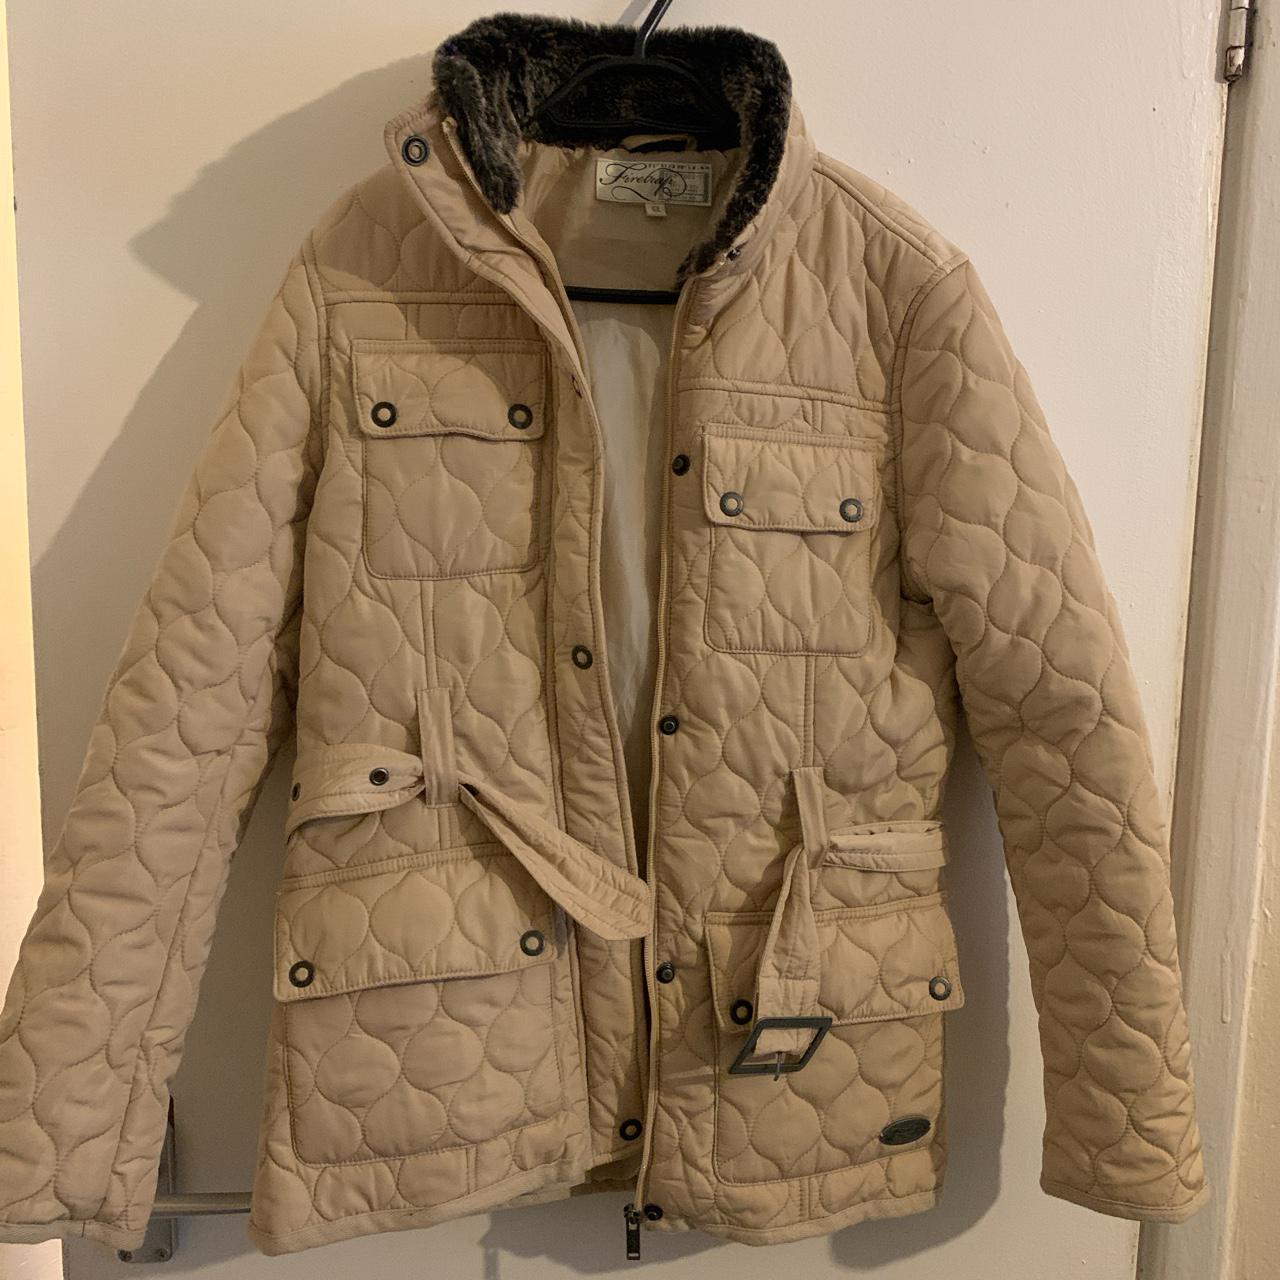 Firetrap cream quilted jacket/coat. Very good... - Depop